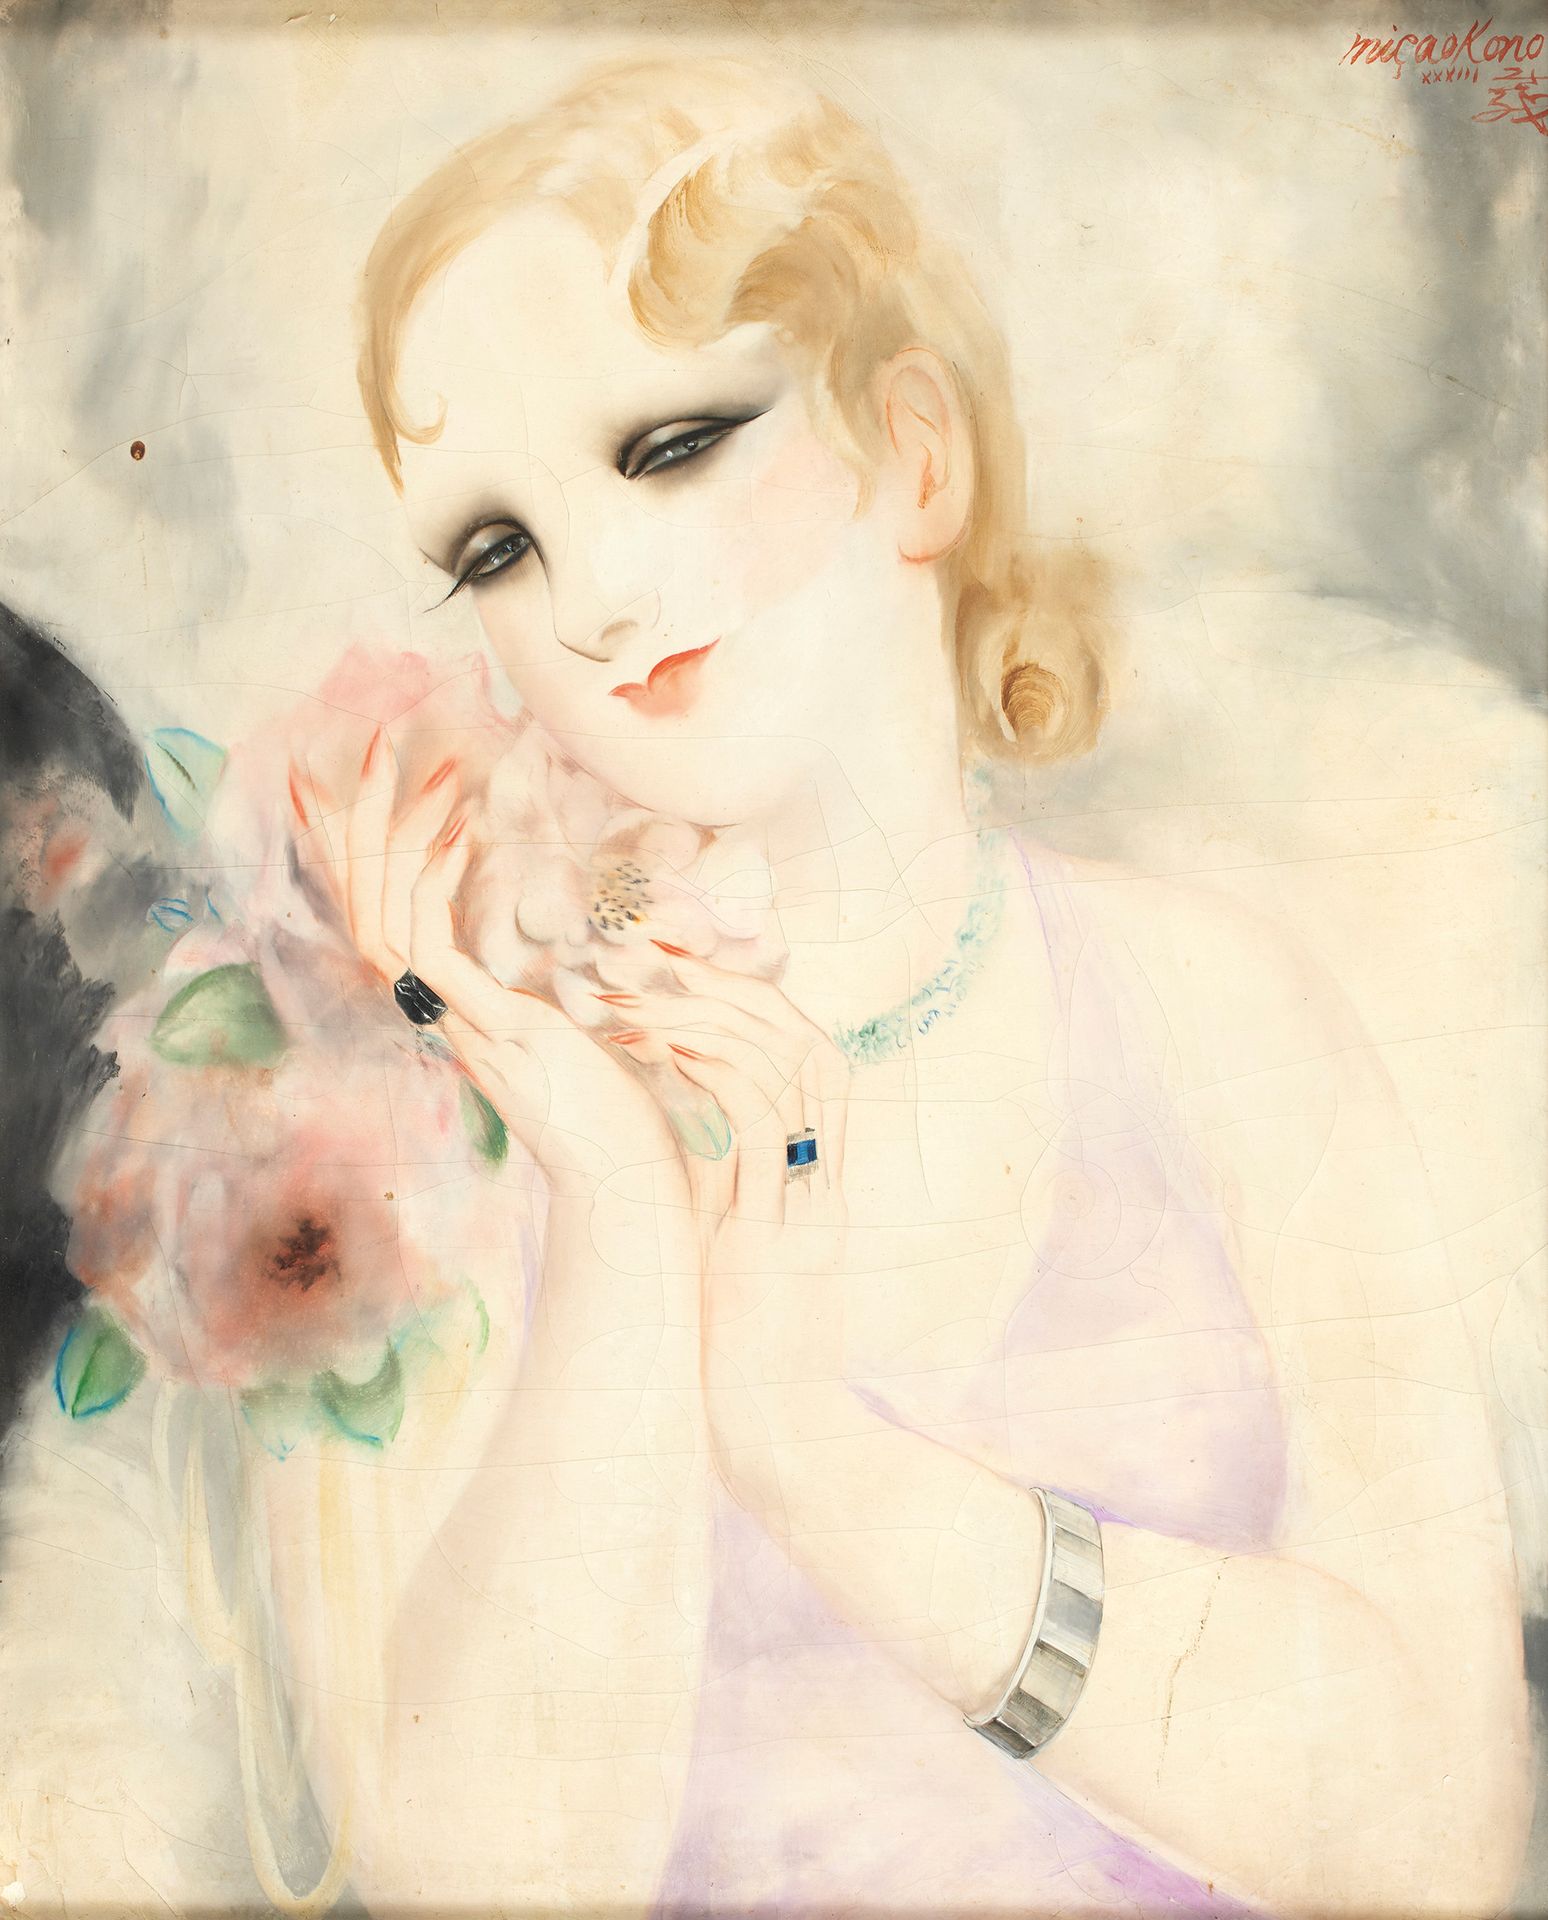 Micao KONO (1876-1954) 米乔-科诺 (1876-1954)
有花的女人，1933年
布面油画，右上方有签名和日期
46 x 38 cm
(&hellip;